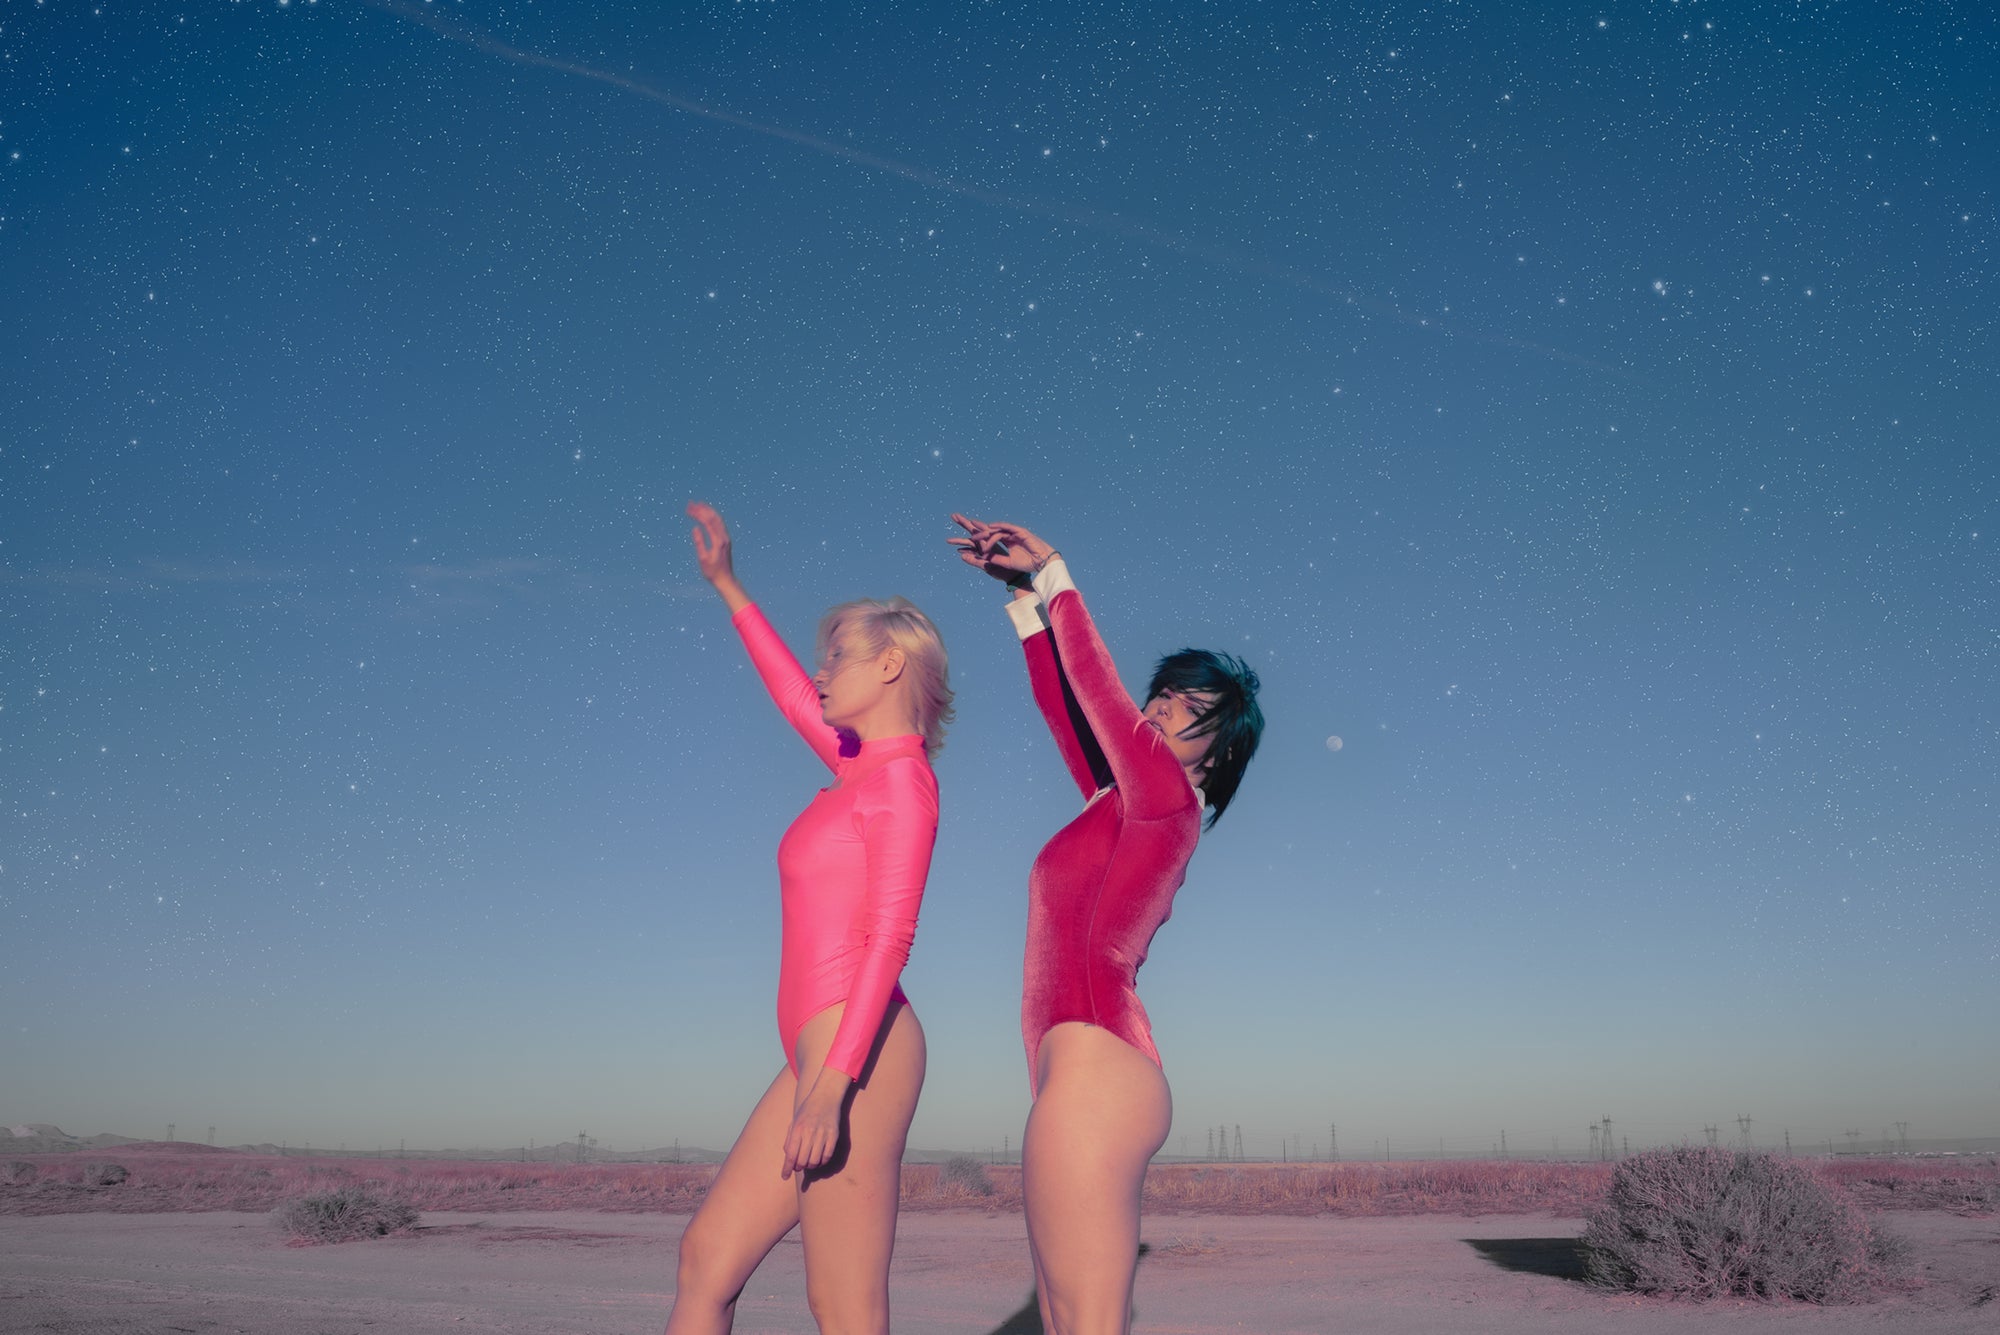 Natalia + Cindy In The Desert